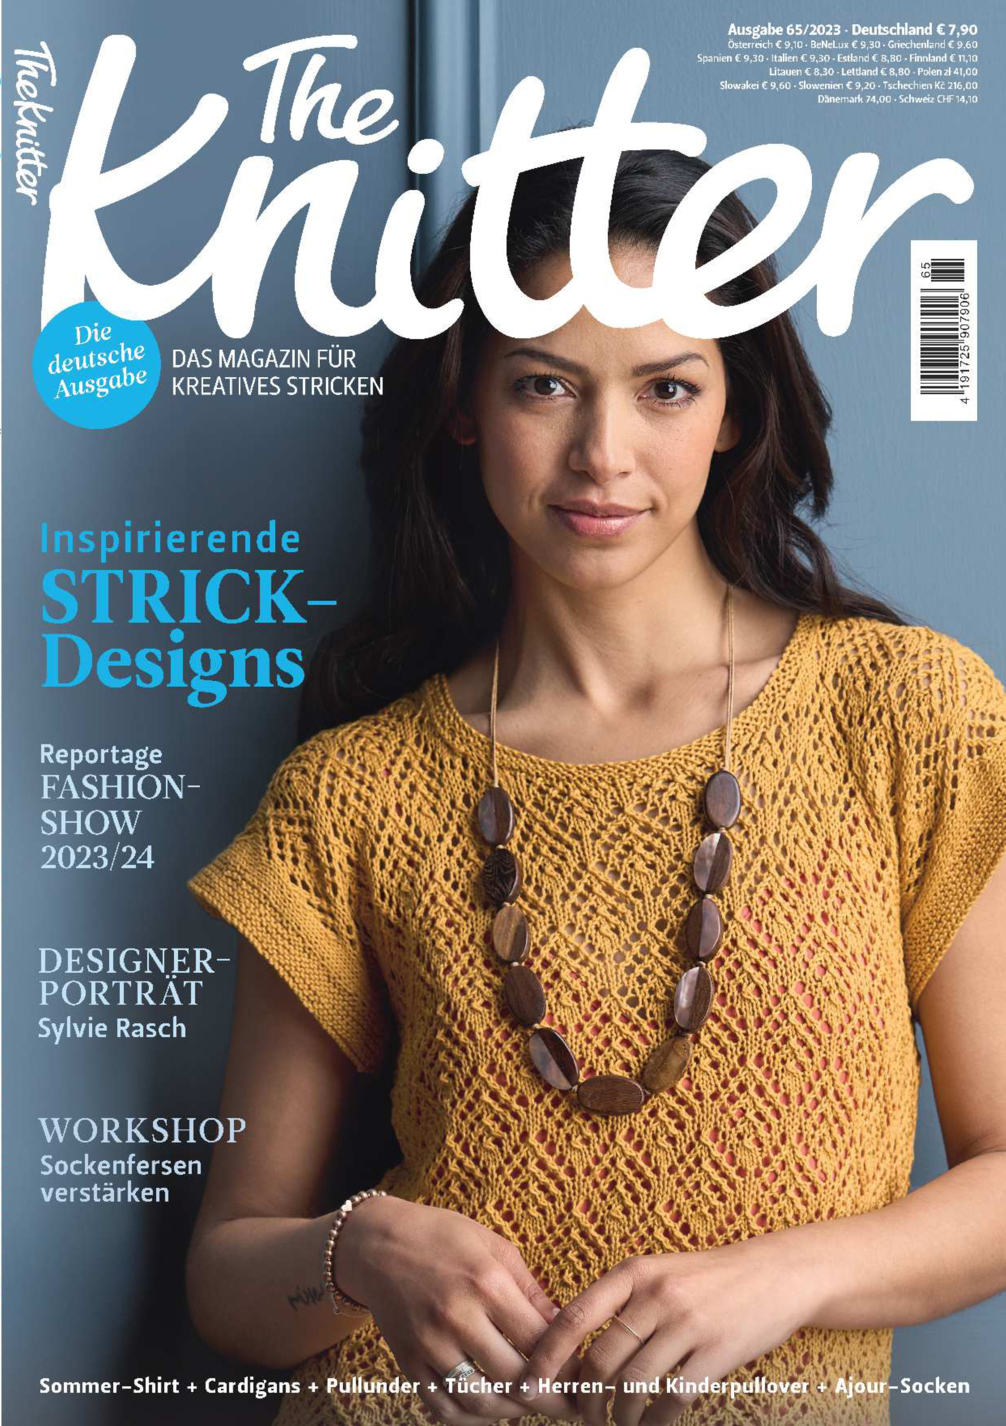 E-Paper: The Knitter 65/2023 - Inspirierende Strick-Designs